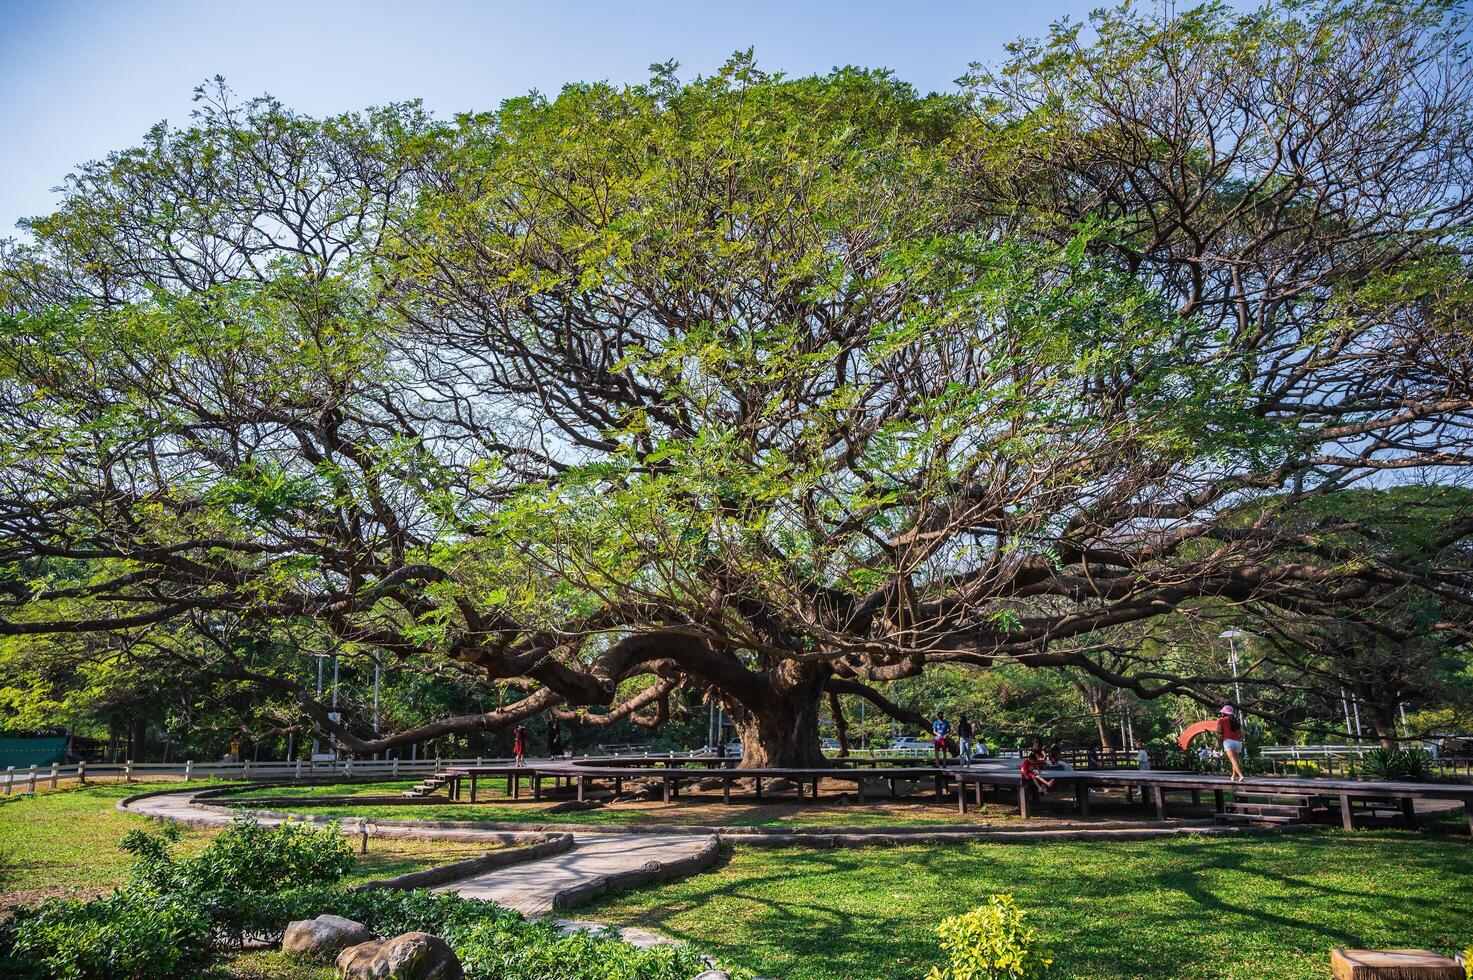 kanchanaburi.thailand-16.1.2022 onbekend mensen reusachtig monnik peul boom kanchanaburi Thailand.meer dan 100 jaar oud reusachtig aap peul boom. foto